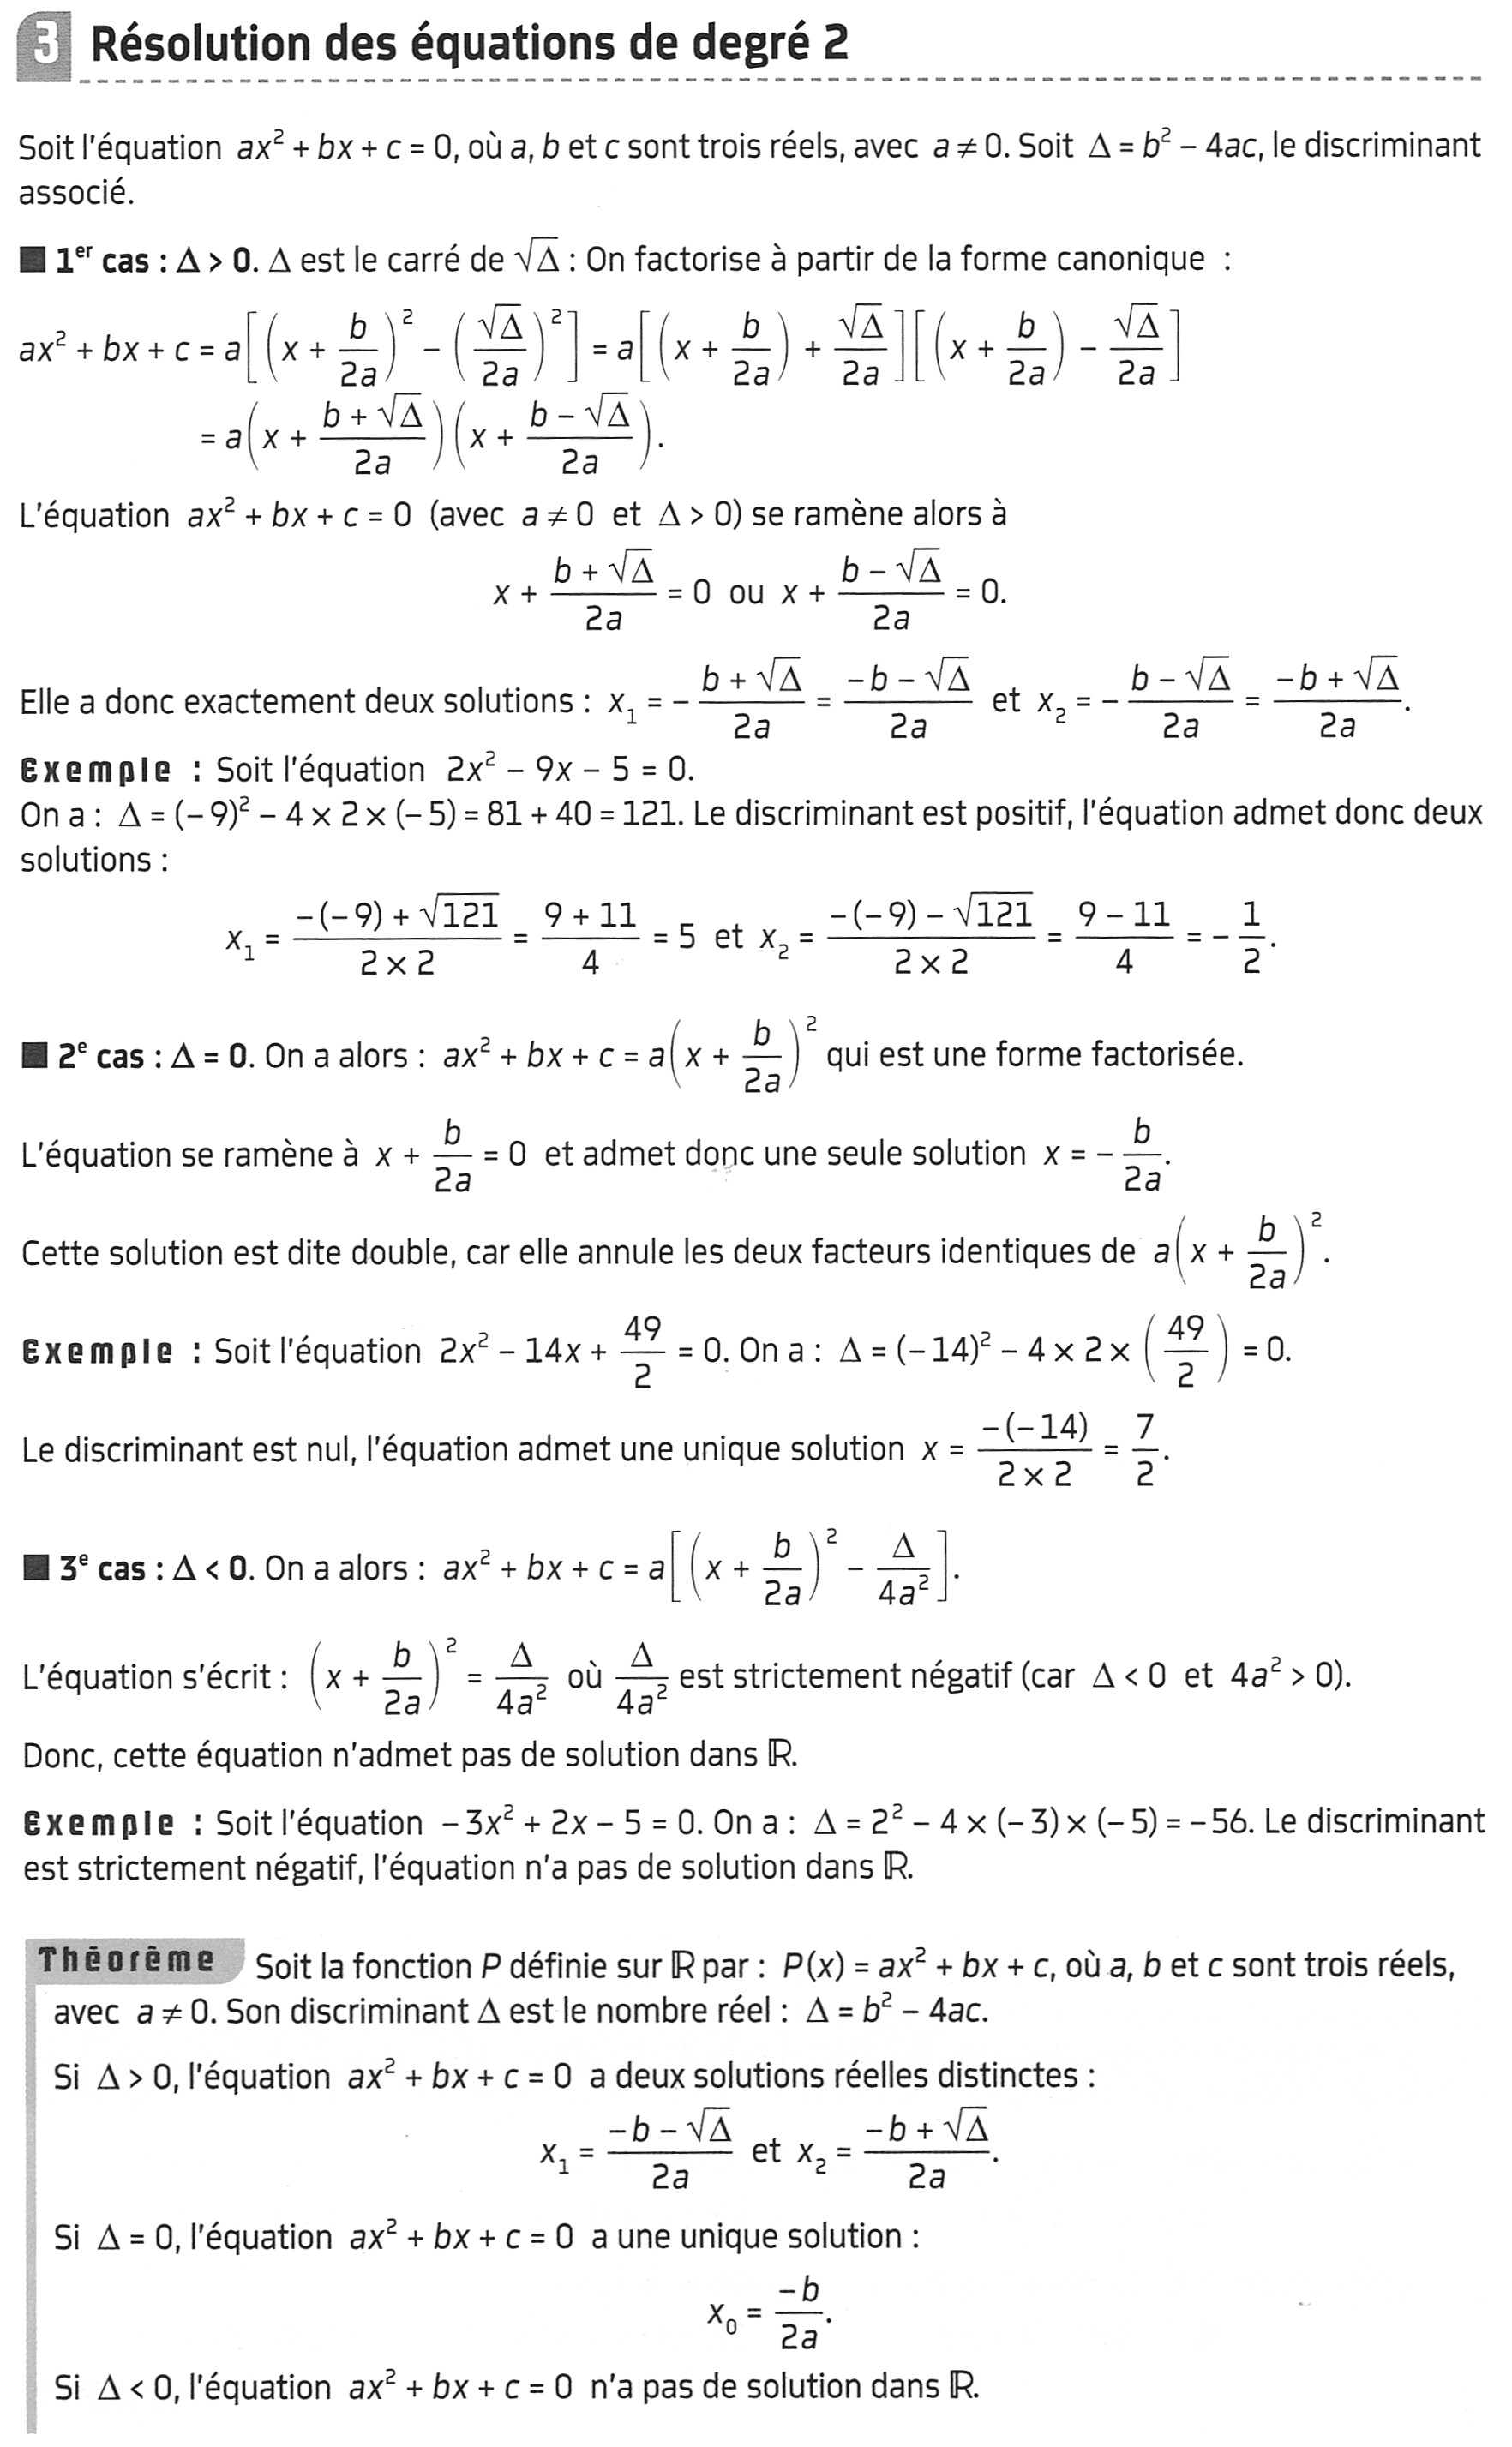 resolution-equation-degre-2